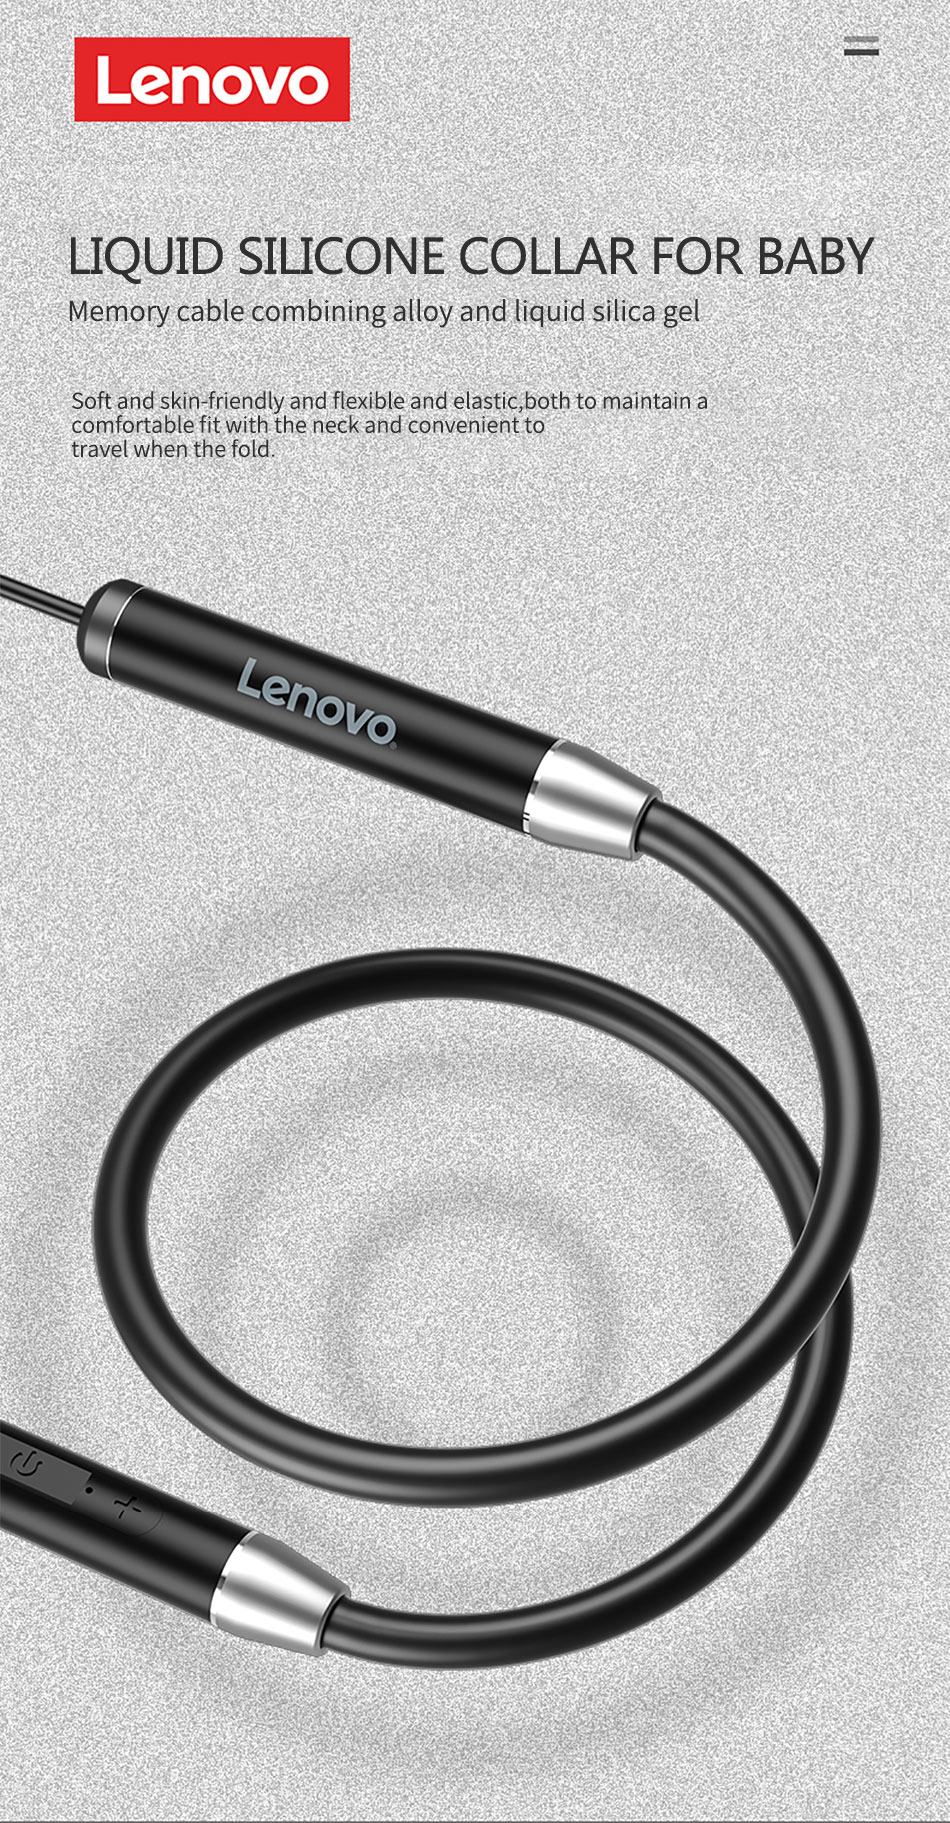 Original Lenovo HE08 Dual Dynamic Smart bluetooth 5.0 Sports Neckband Earphone In-Ear Music Wireless Earbuds with HD Mic - Black